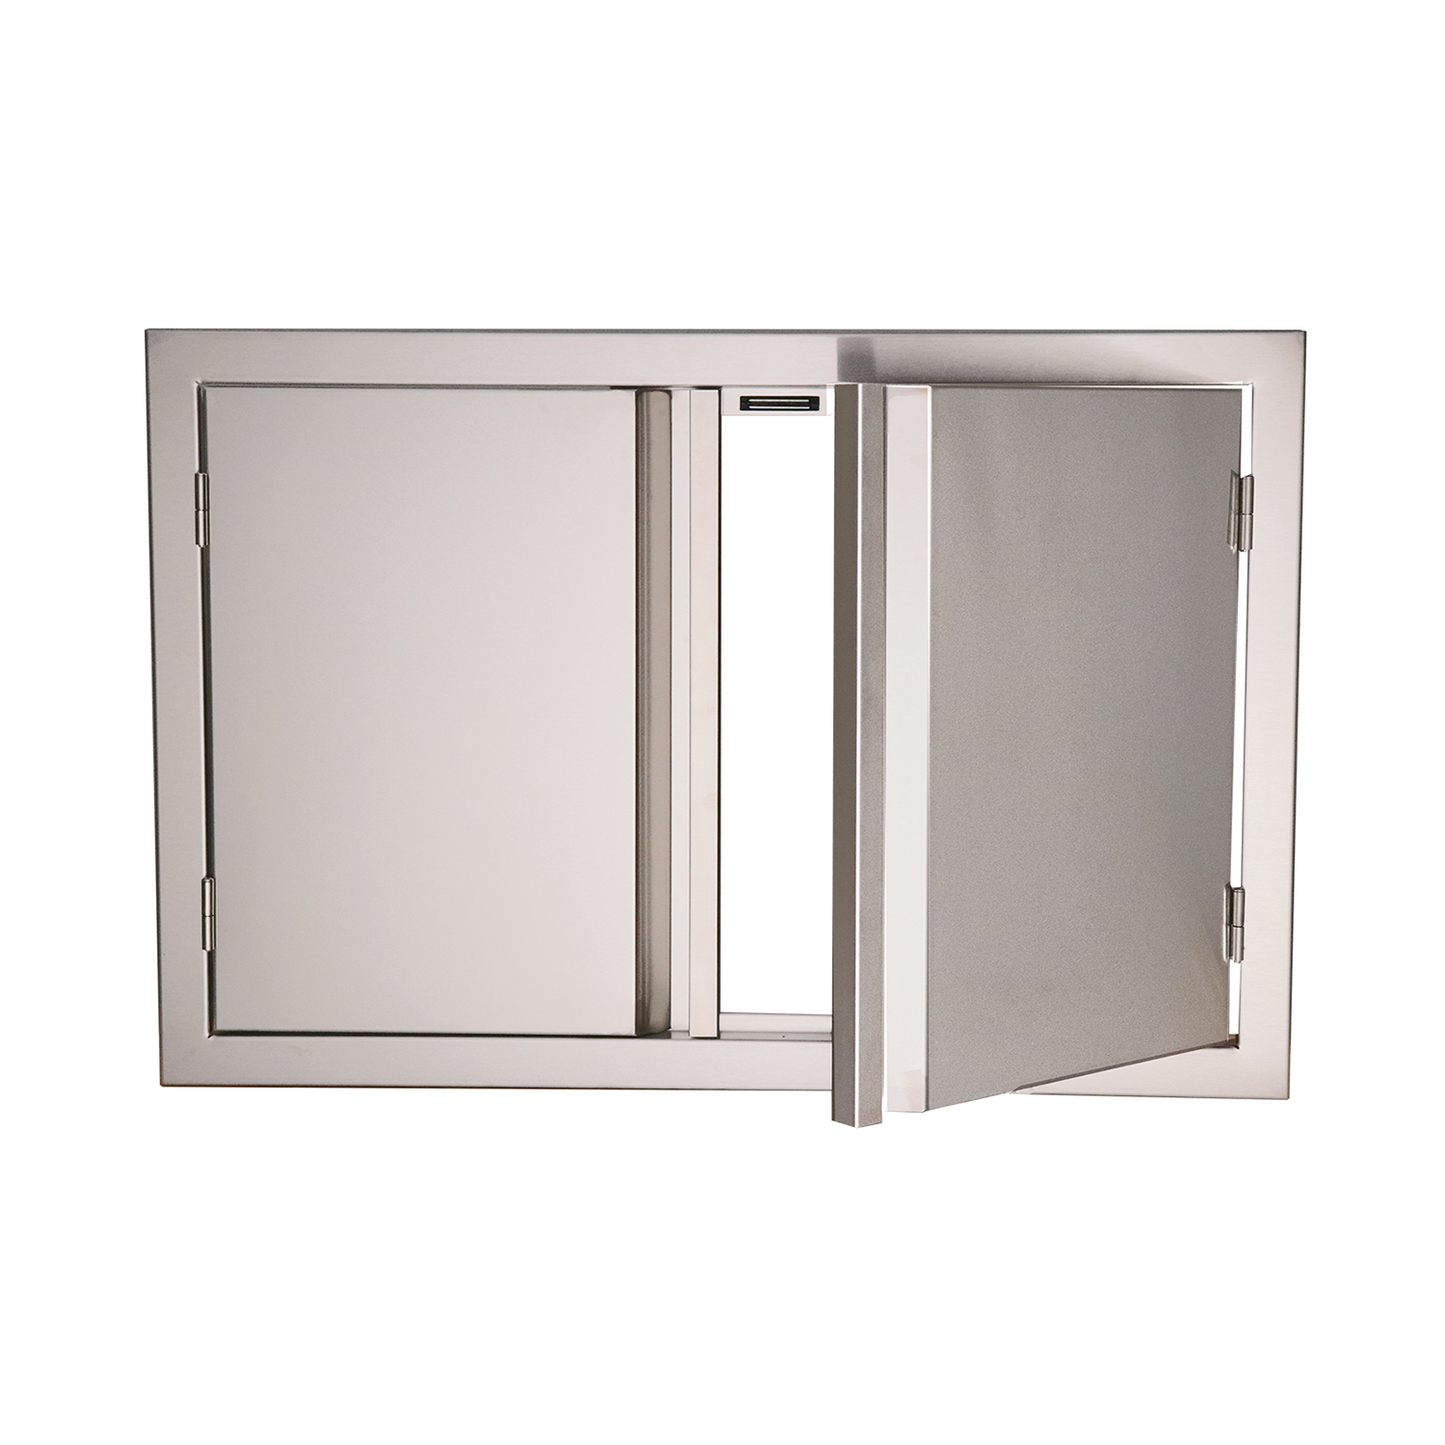 RCS Valiant Series 45-Inch Stainless Steel Double Access Door - VDD2